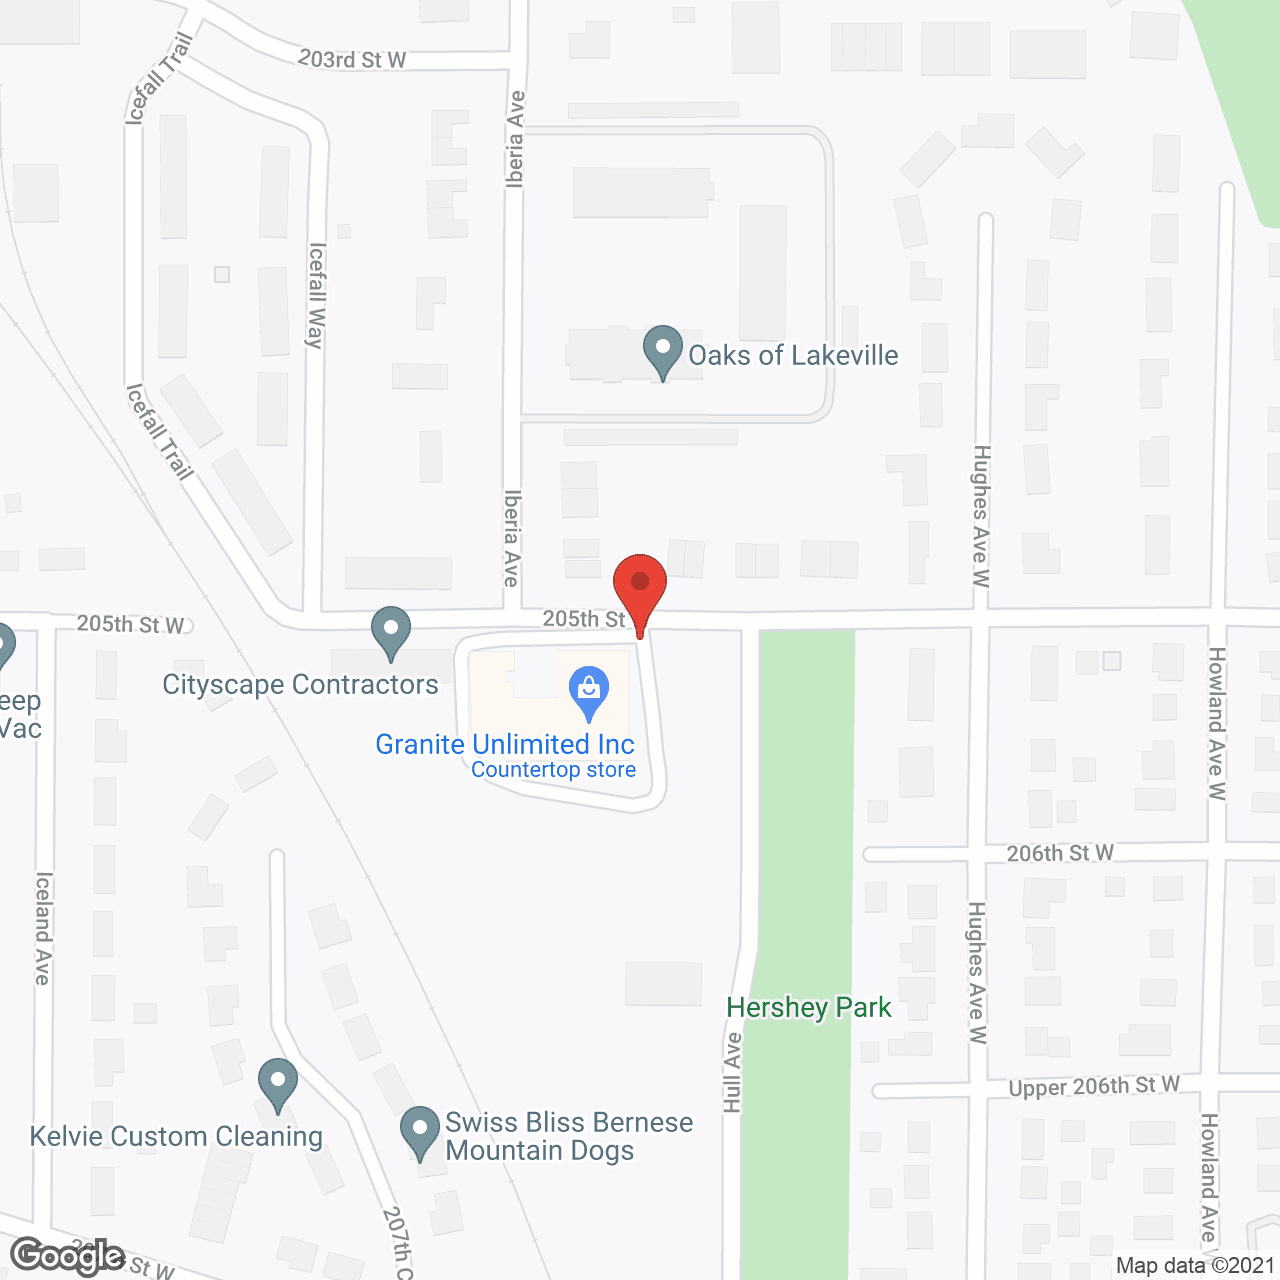 Spero Lakeville in google map